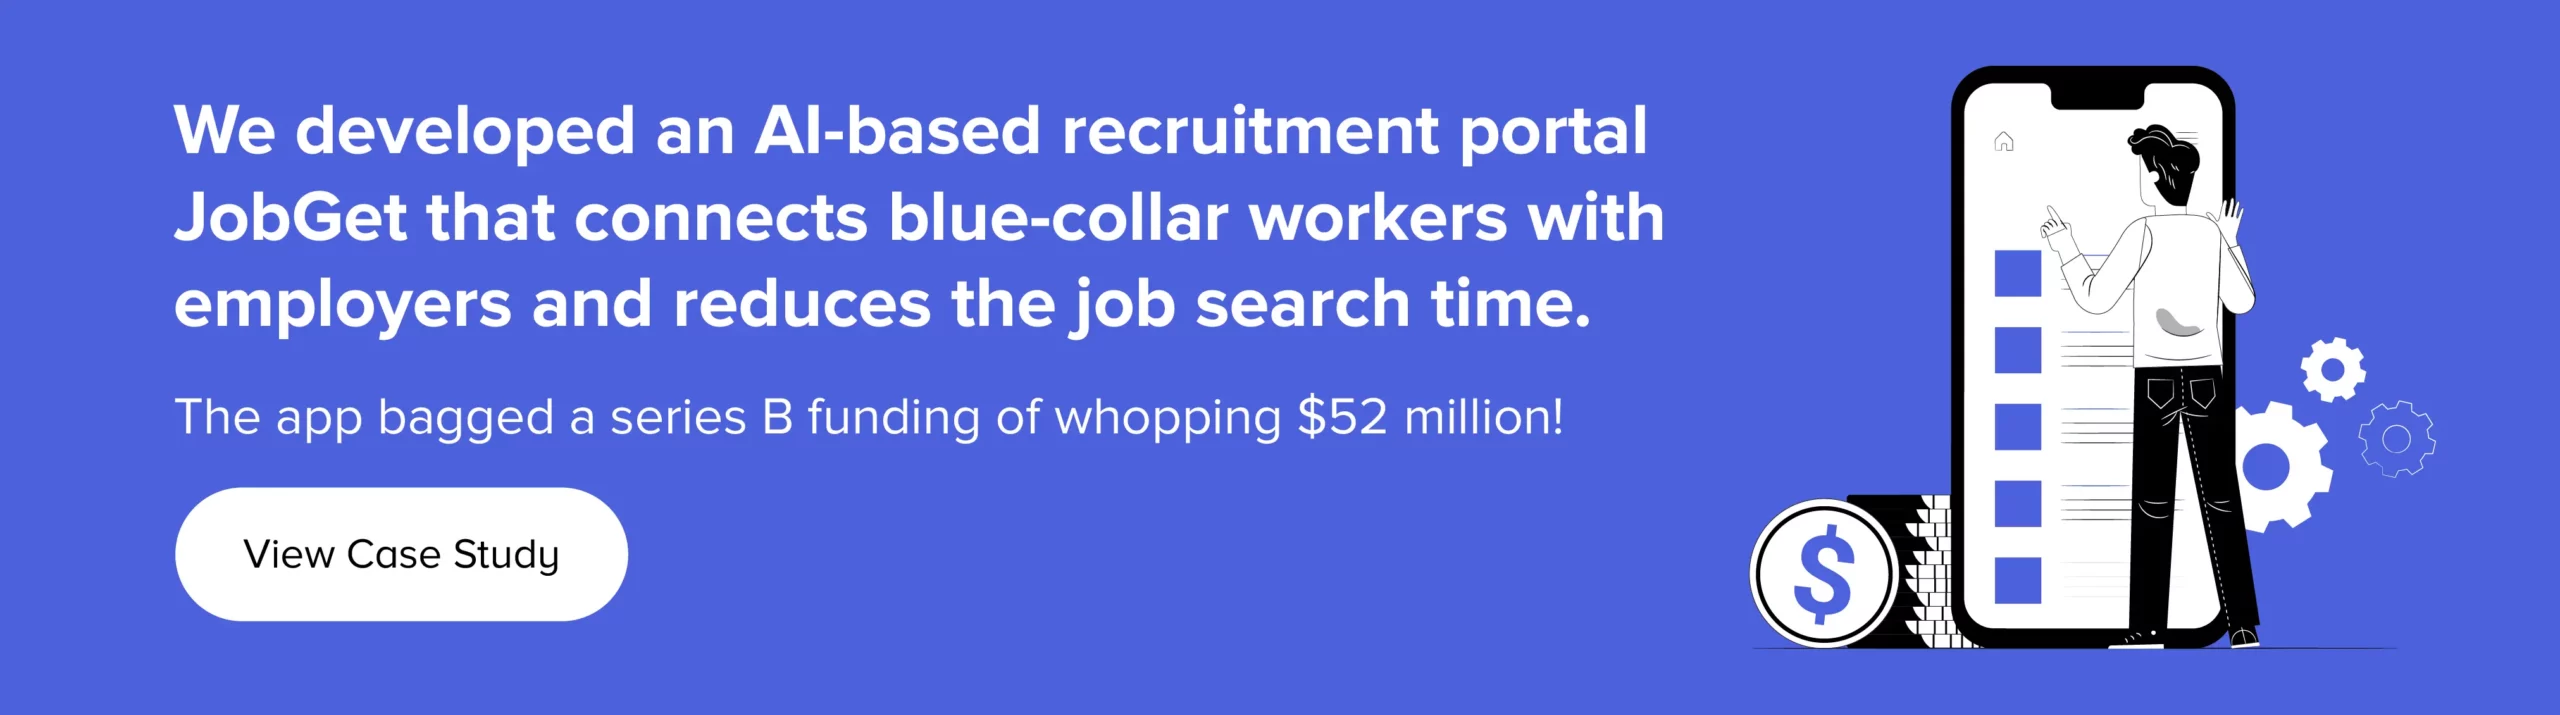 AI-based recruitment portal